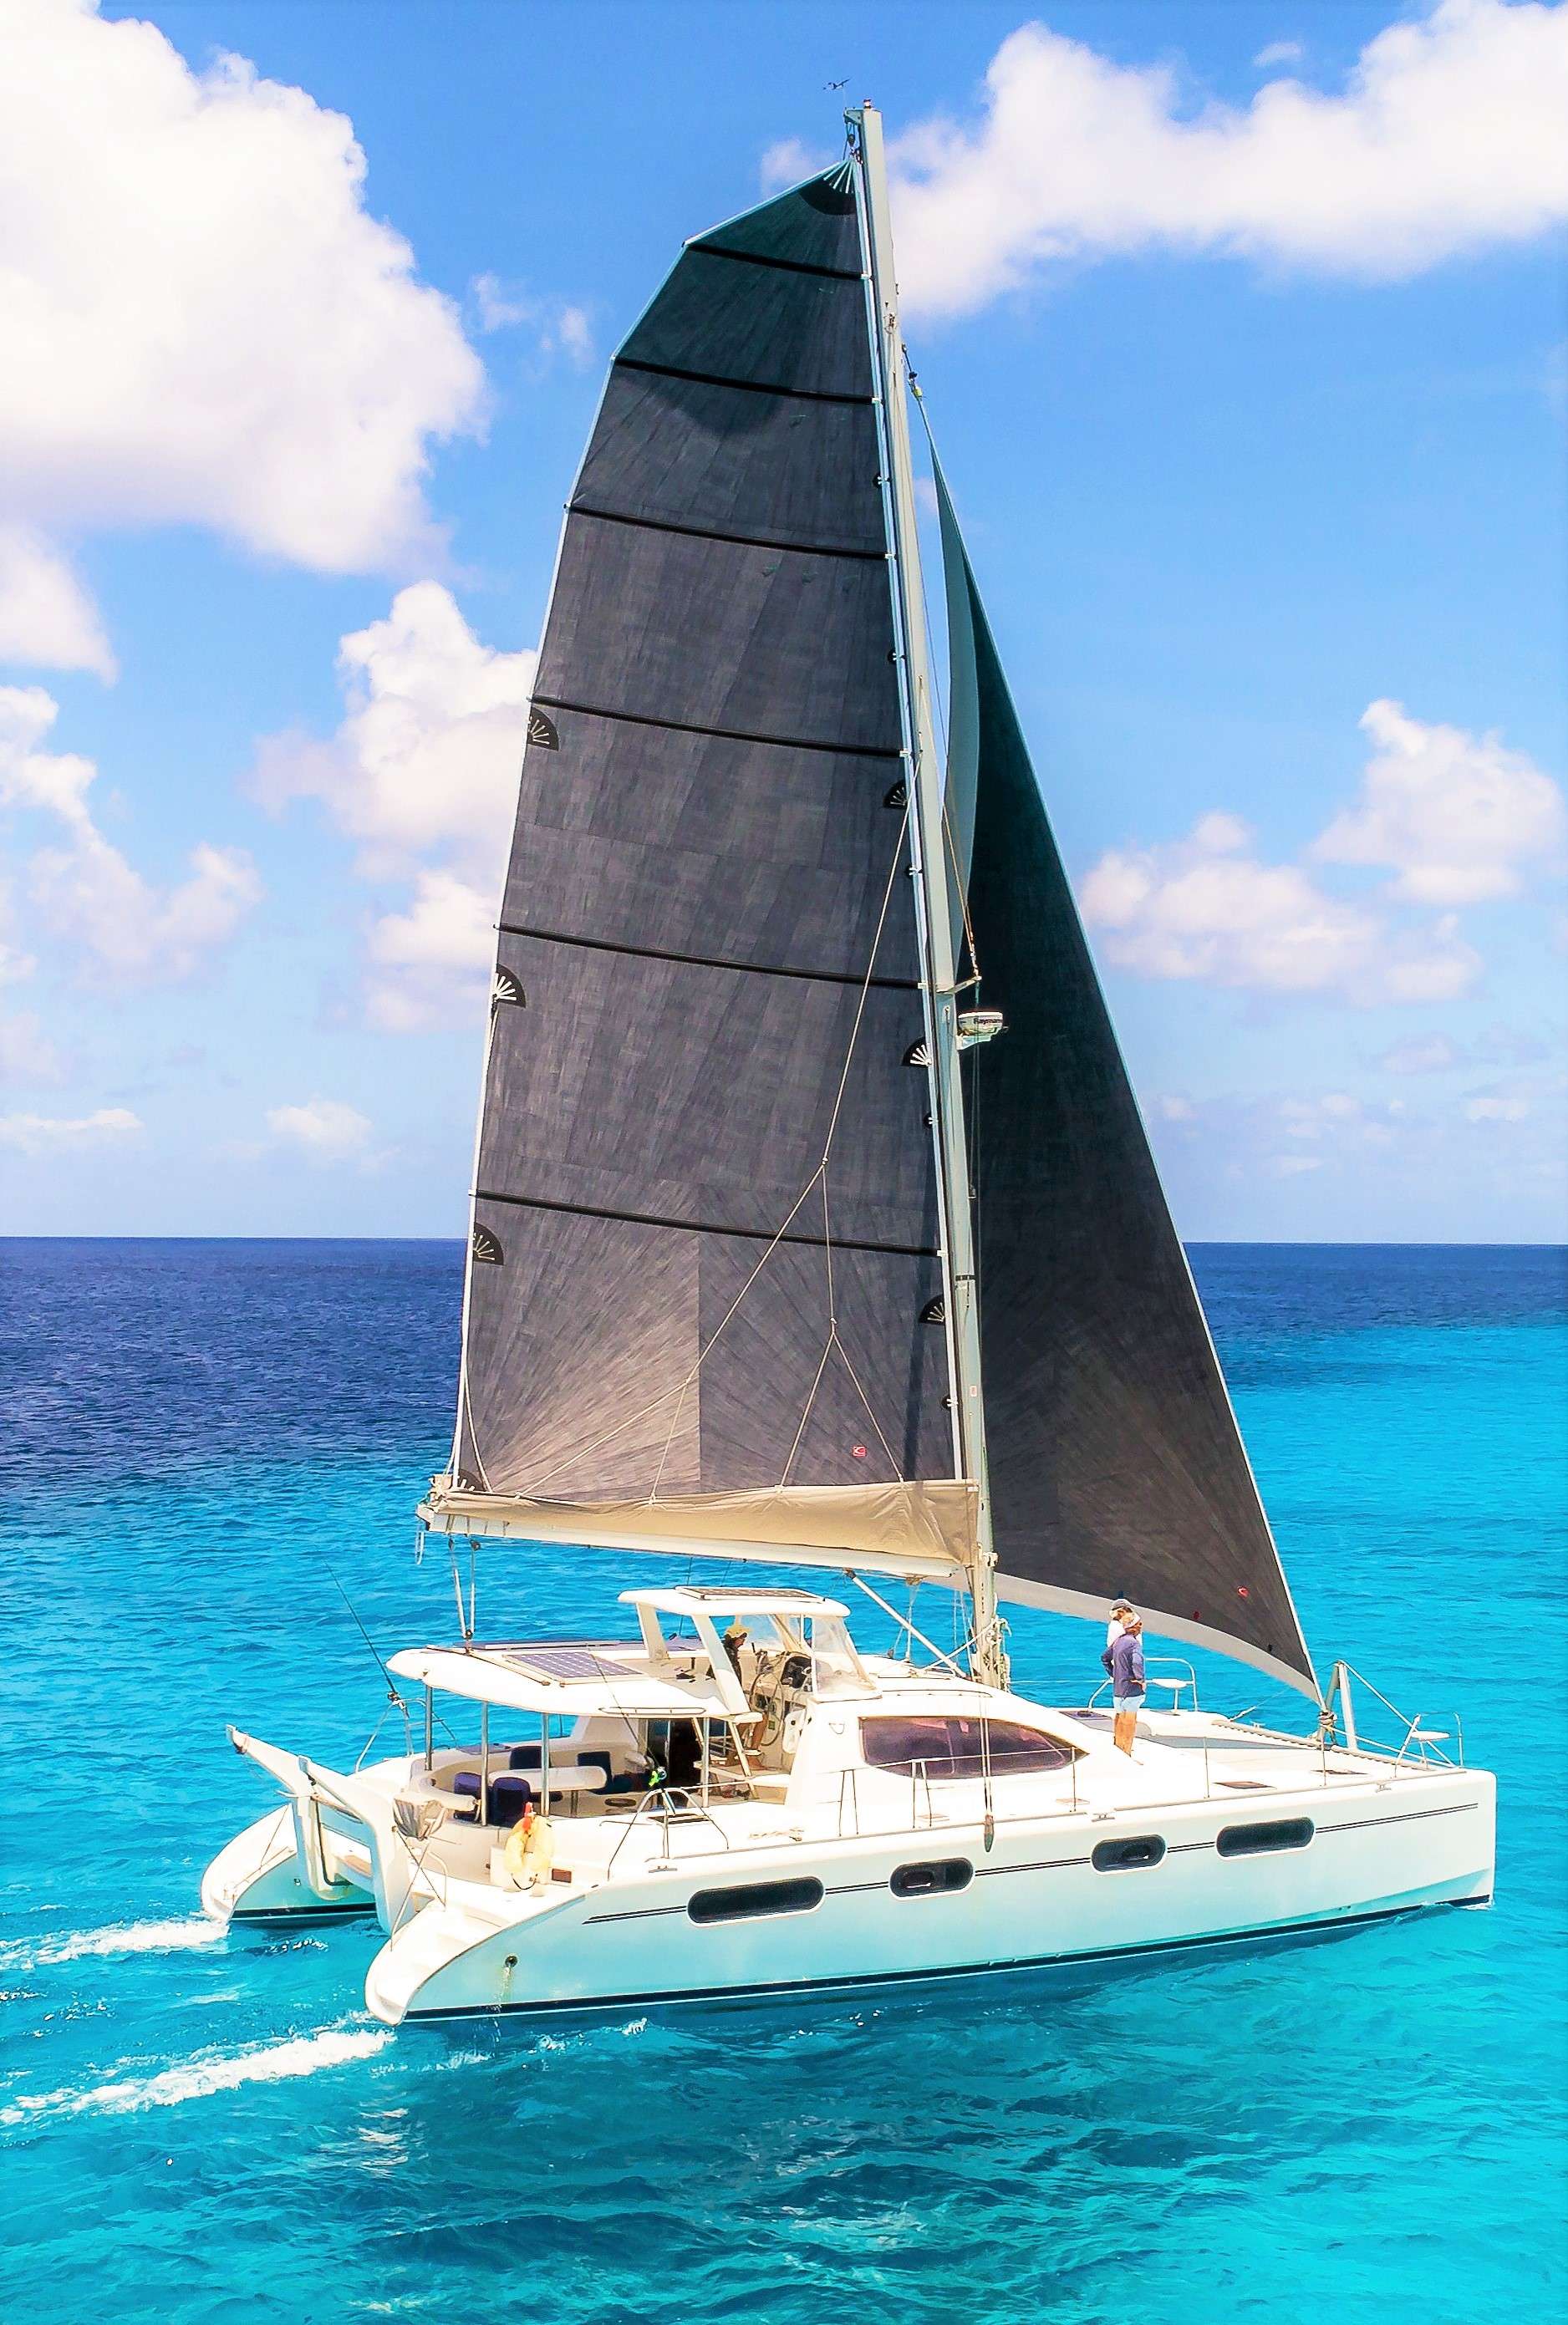 destiny iii - Catamaran Charter USA & Boat hire in Florida & Bahamas 1